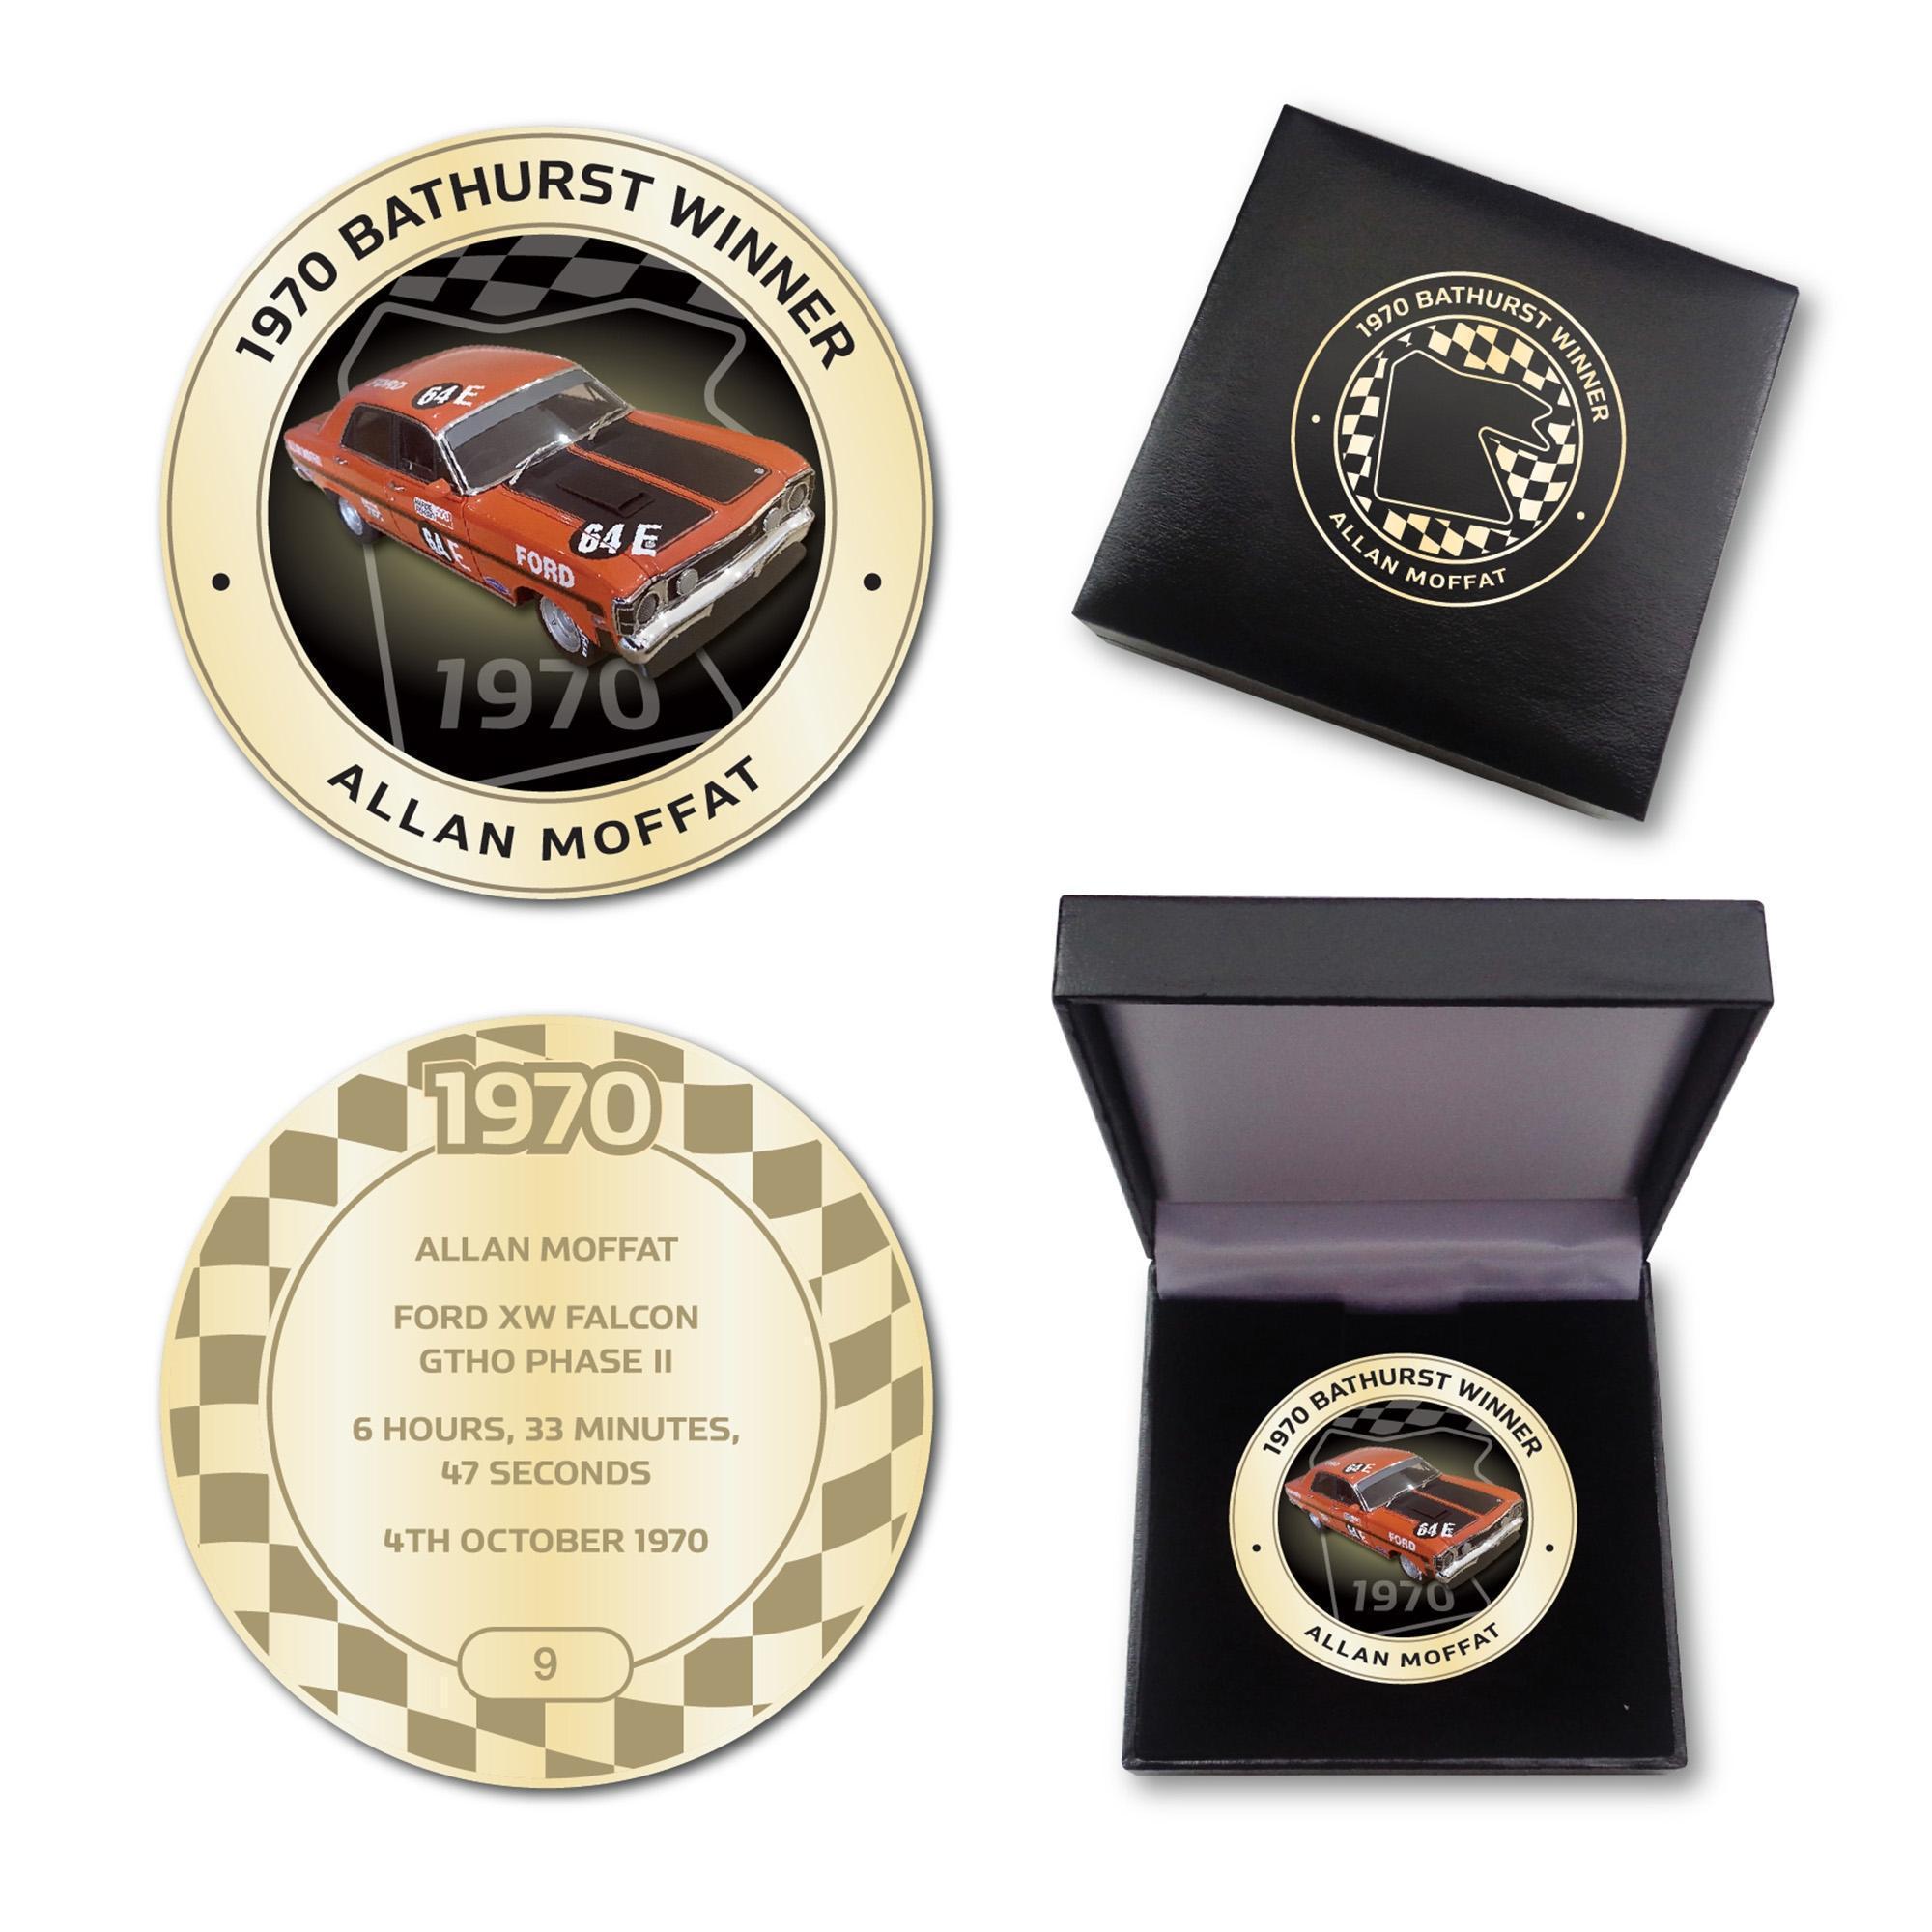 1970 Bathurst Winner Antique Gold Coloured Medallion In Box - Allan Moffat Ford XW Falcon GTHO Phase III